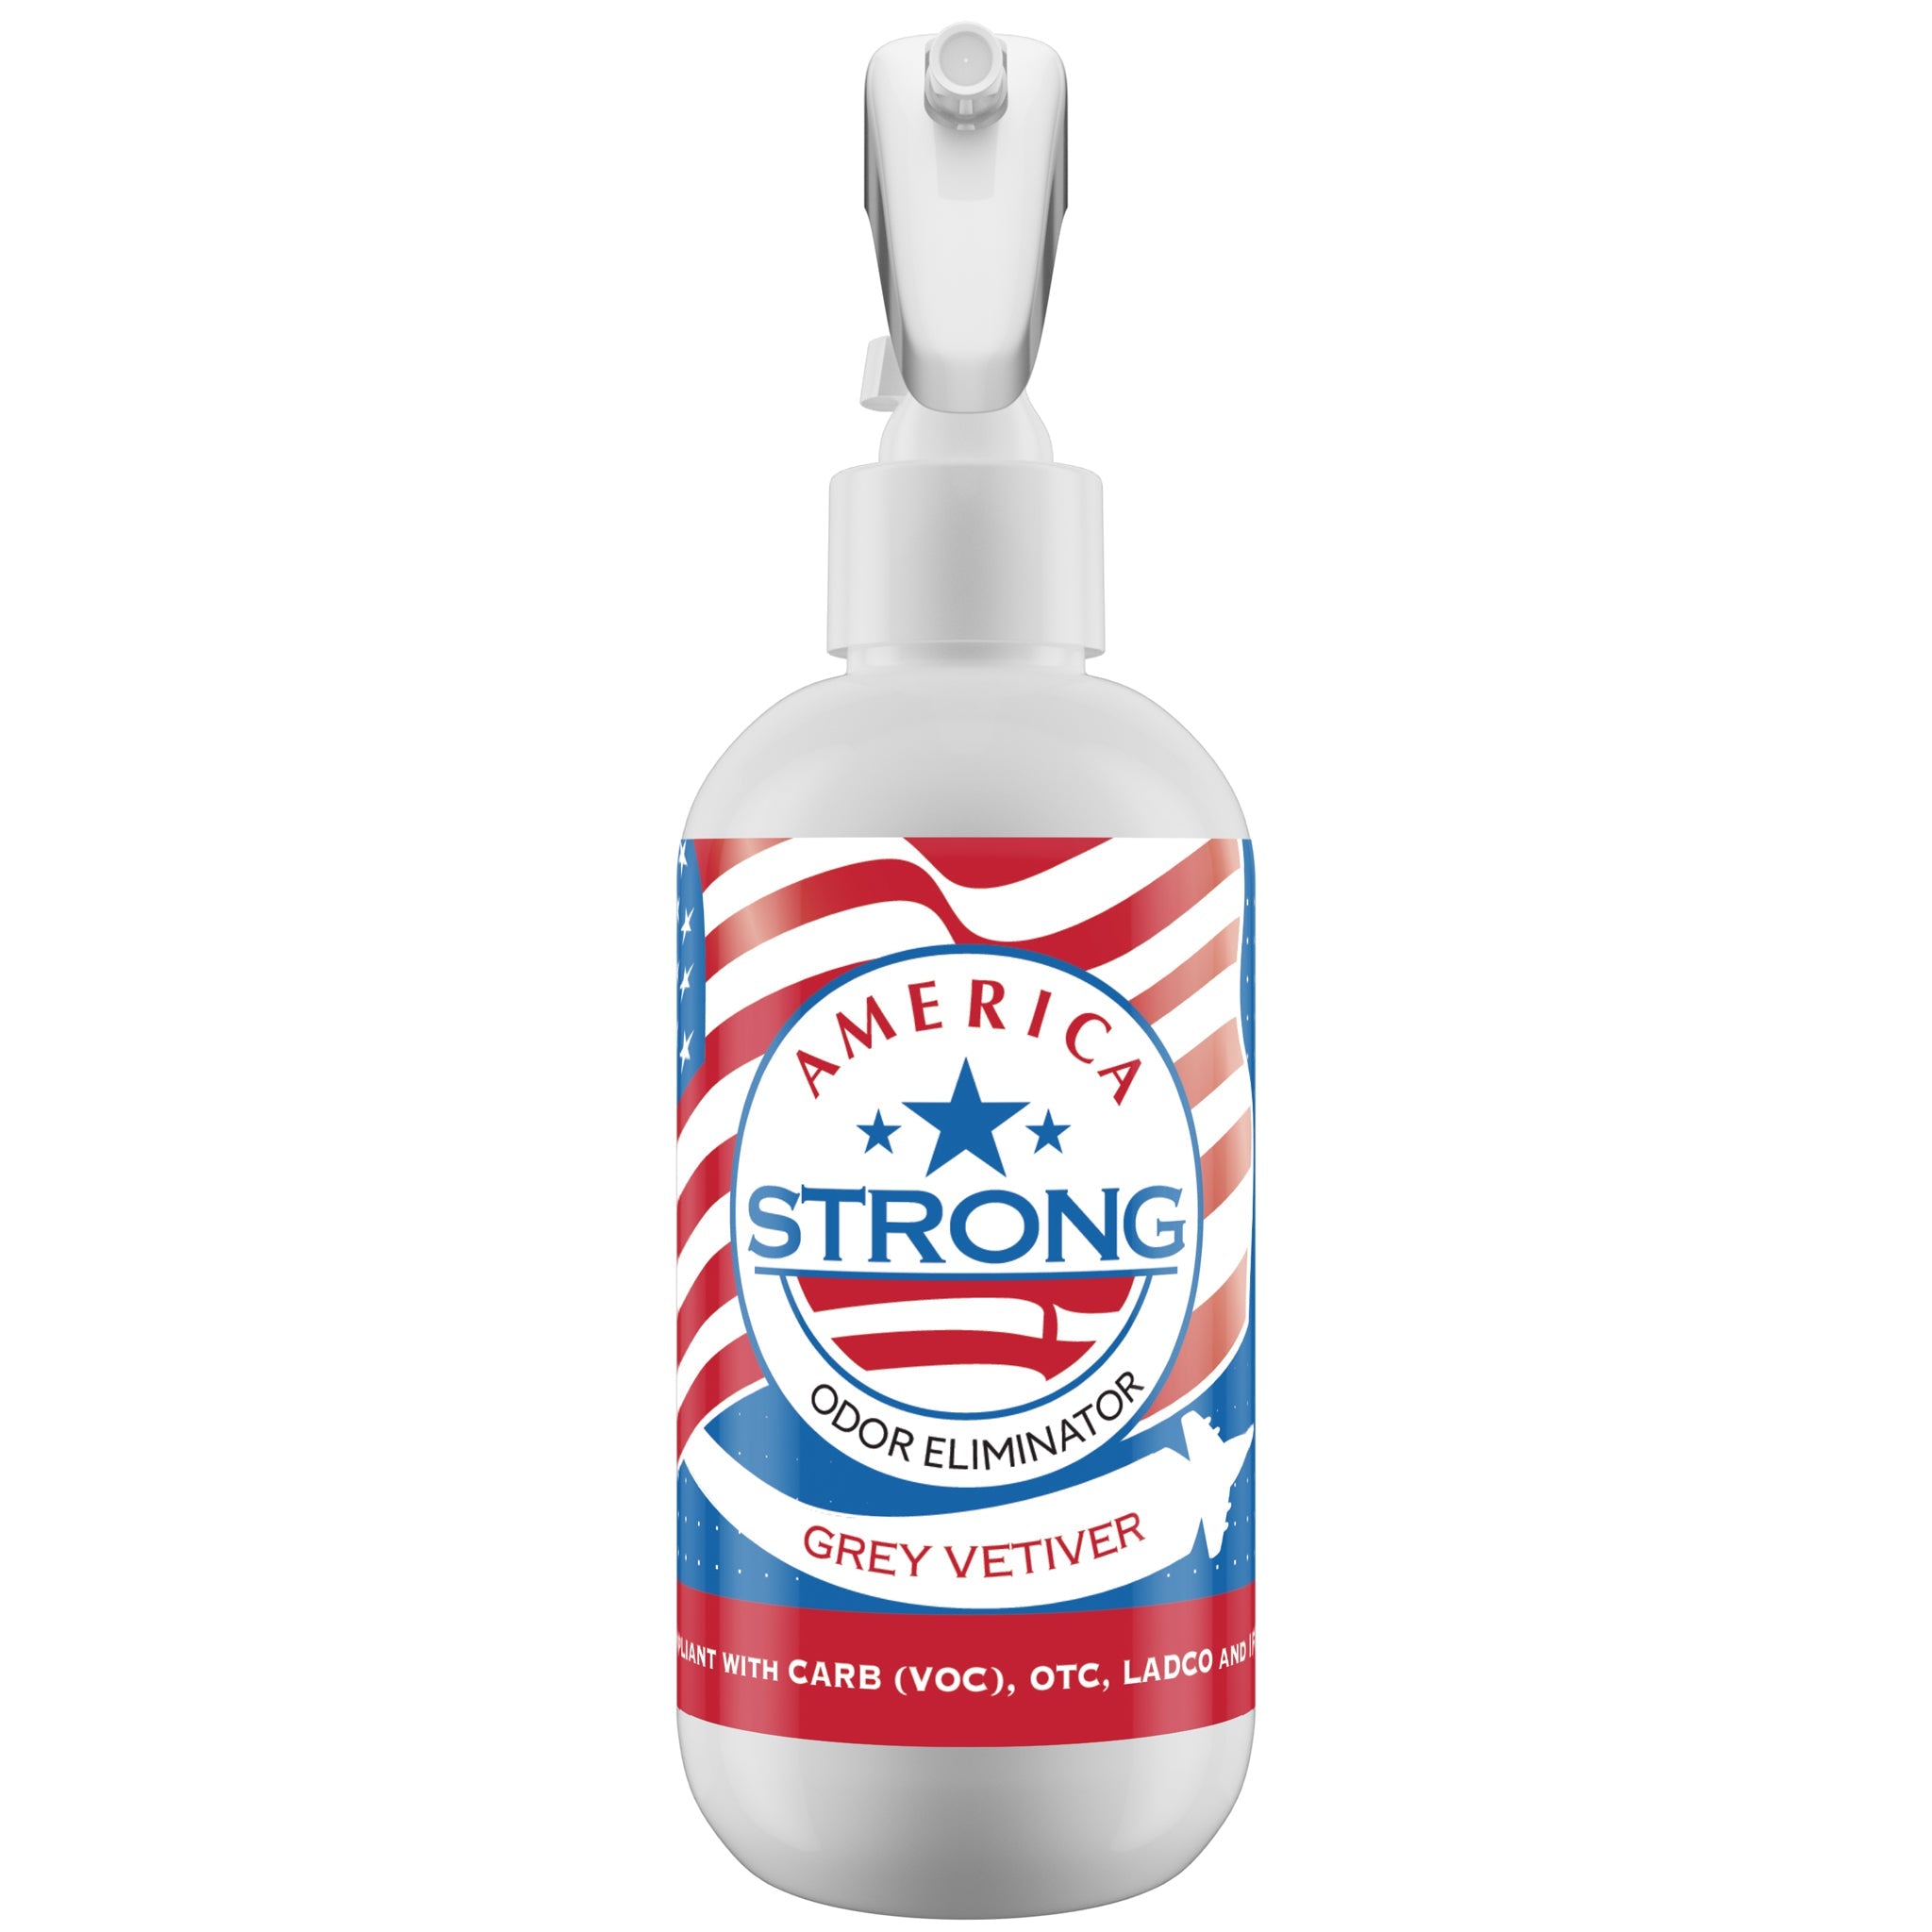 America Strong Odor Eliminator - Grey Vetiver Scent Size: 8.0oz